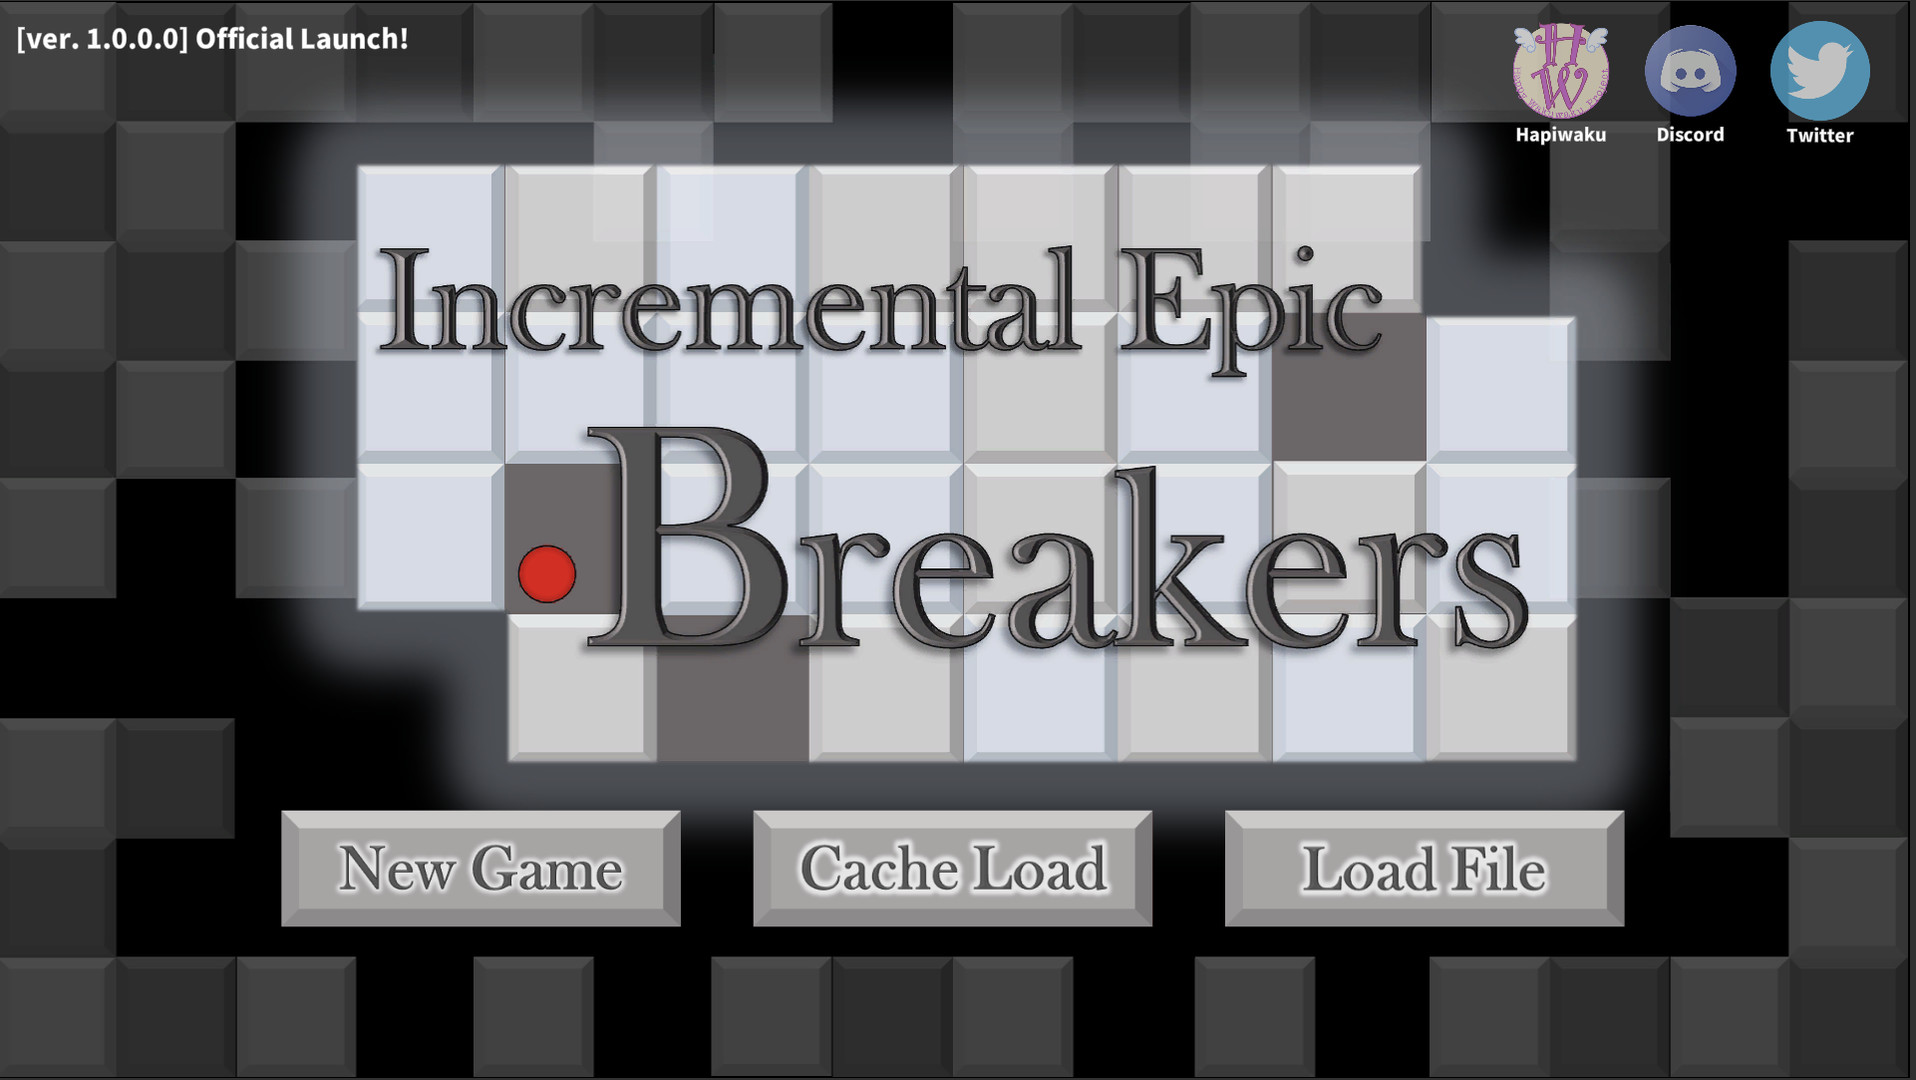 Incremental Epic Breakers - Starter Pack Featured Screenshot #1